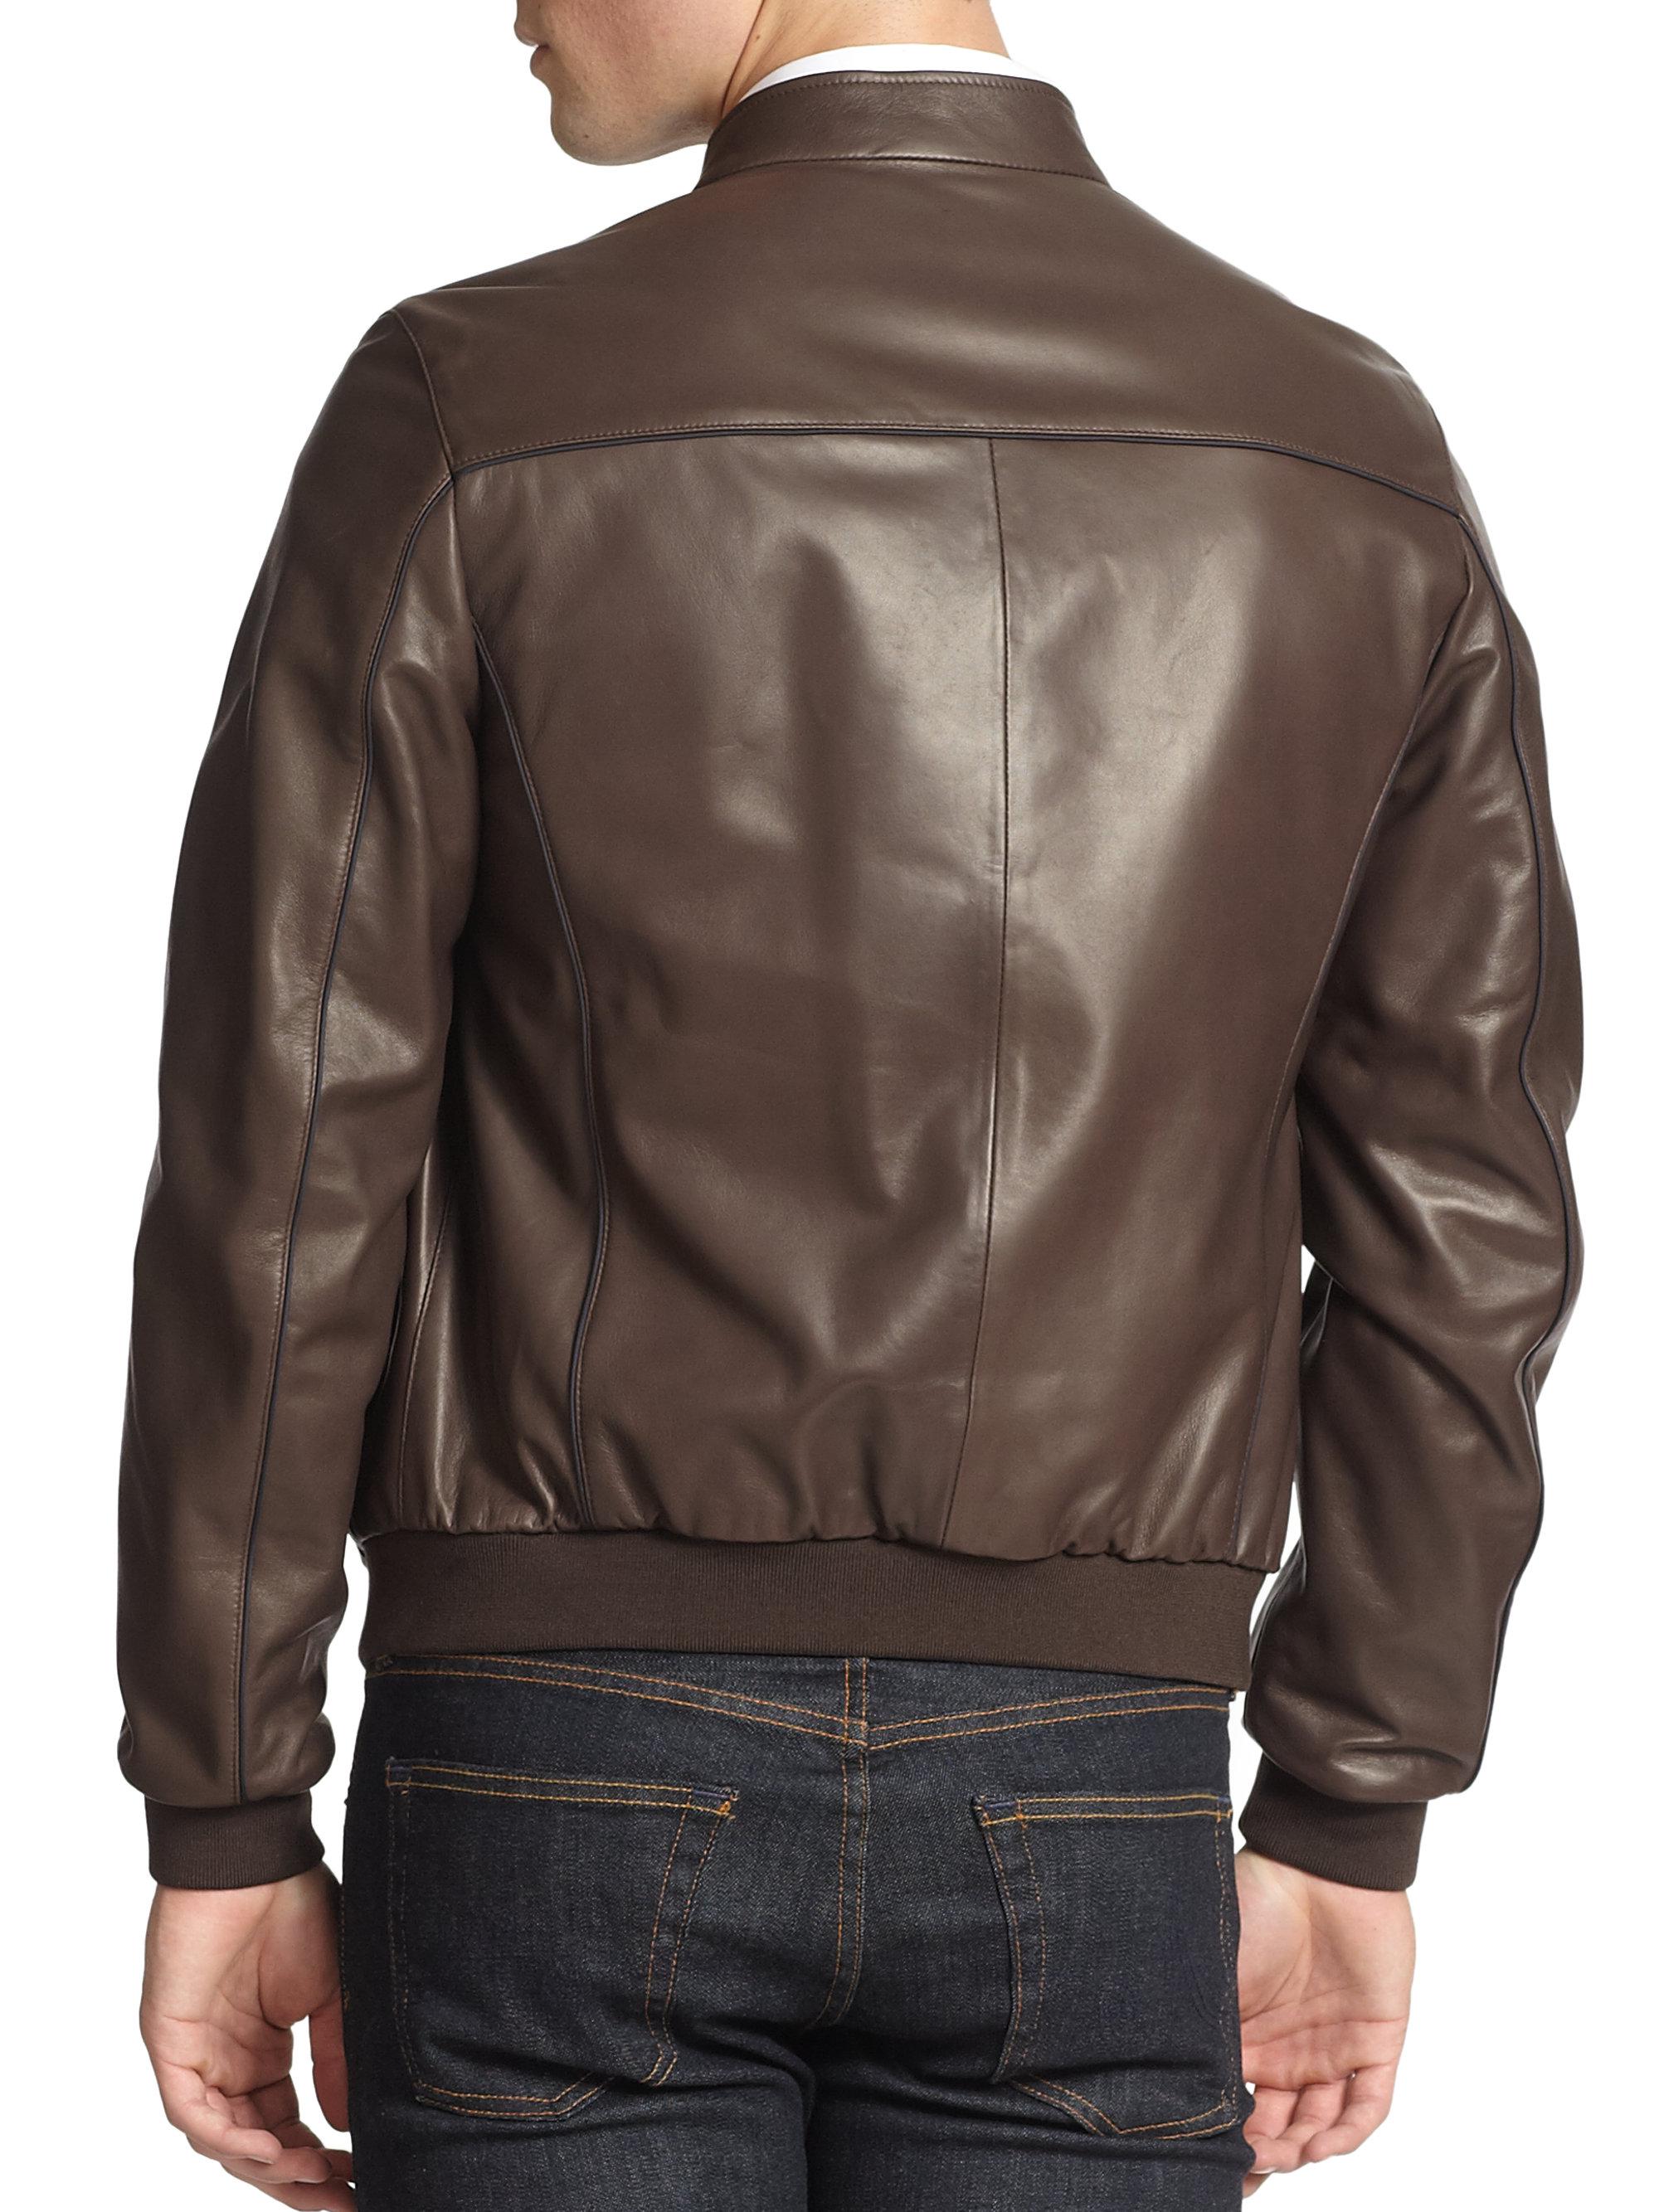 Lyst - Ferragamo Reversible Leather Bomber Jacket in Brown for Men